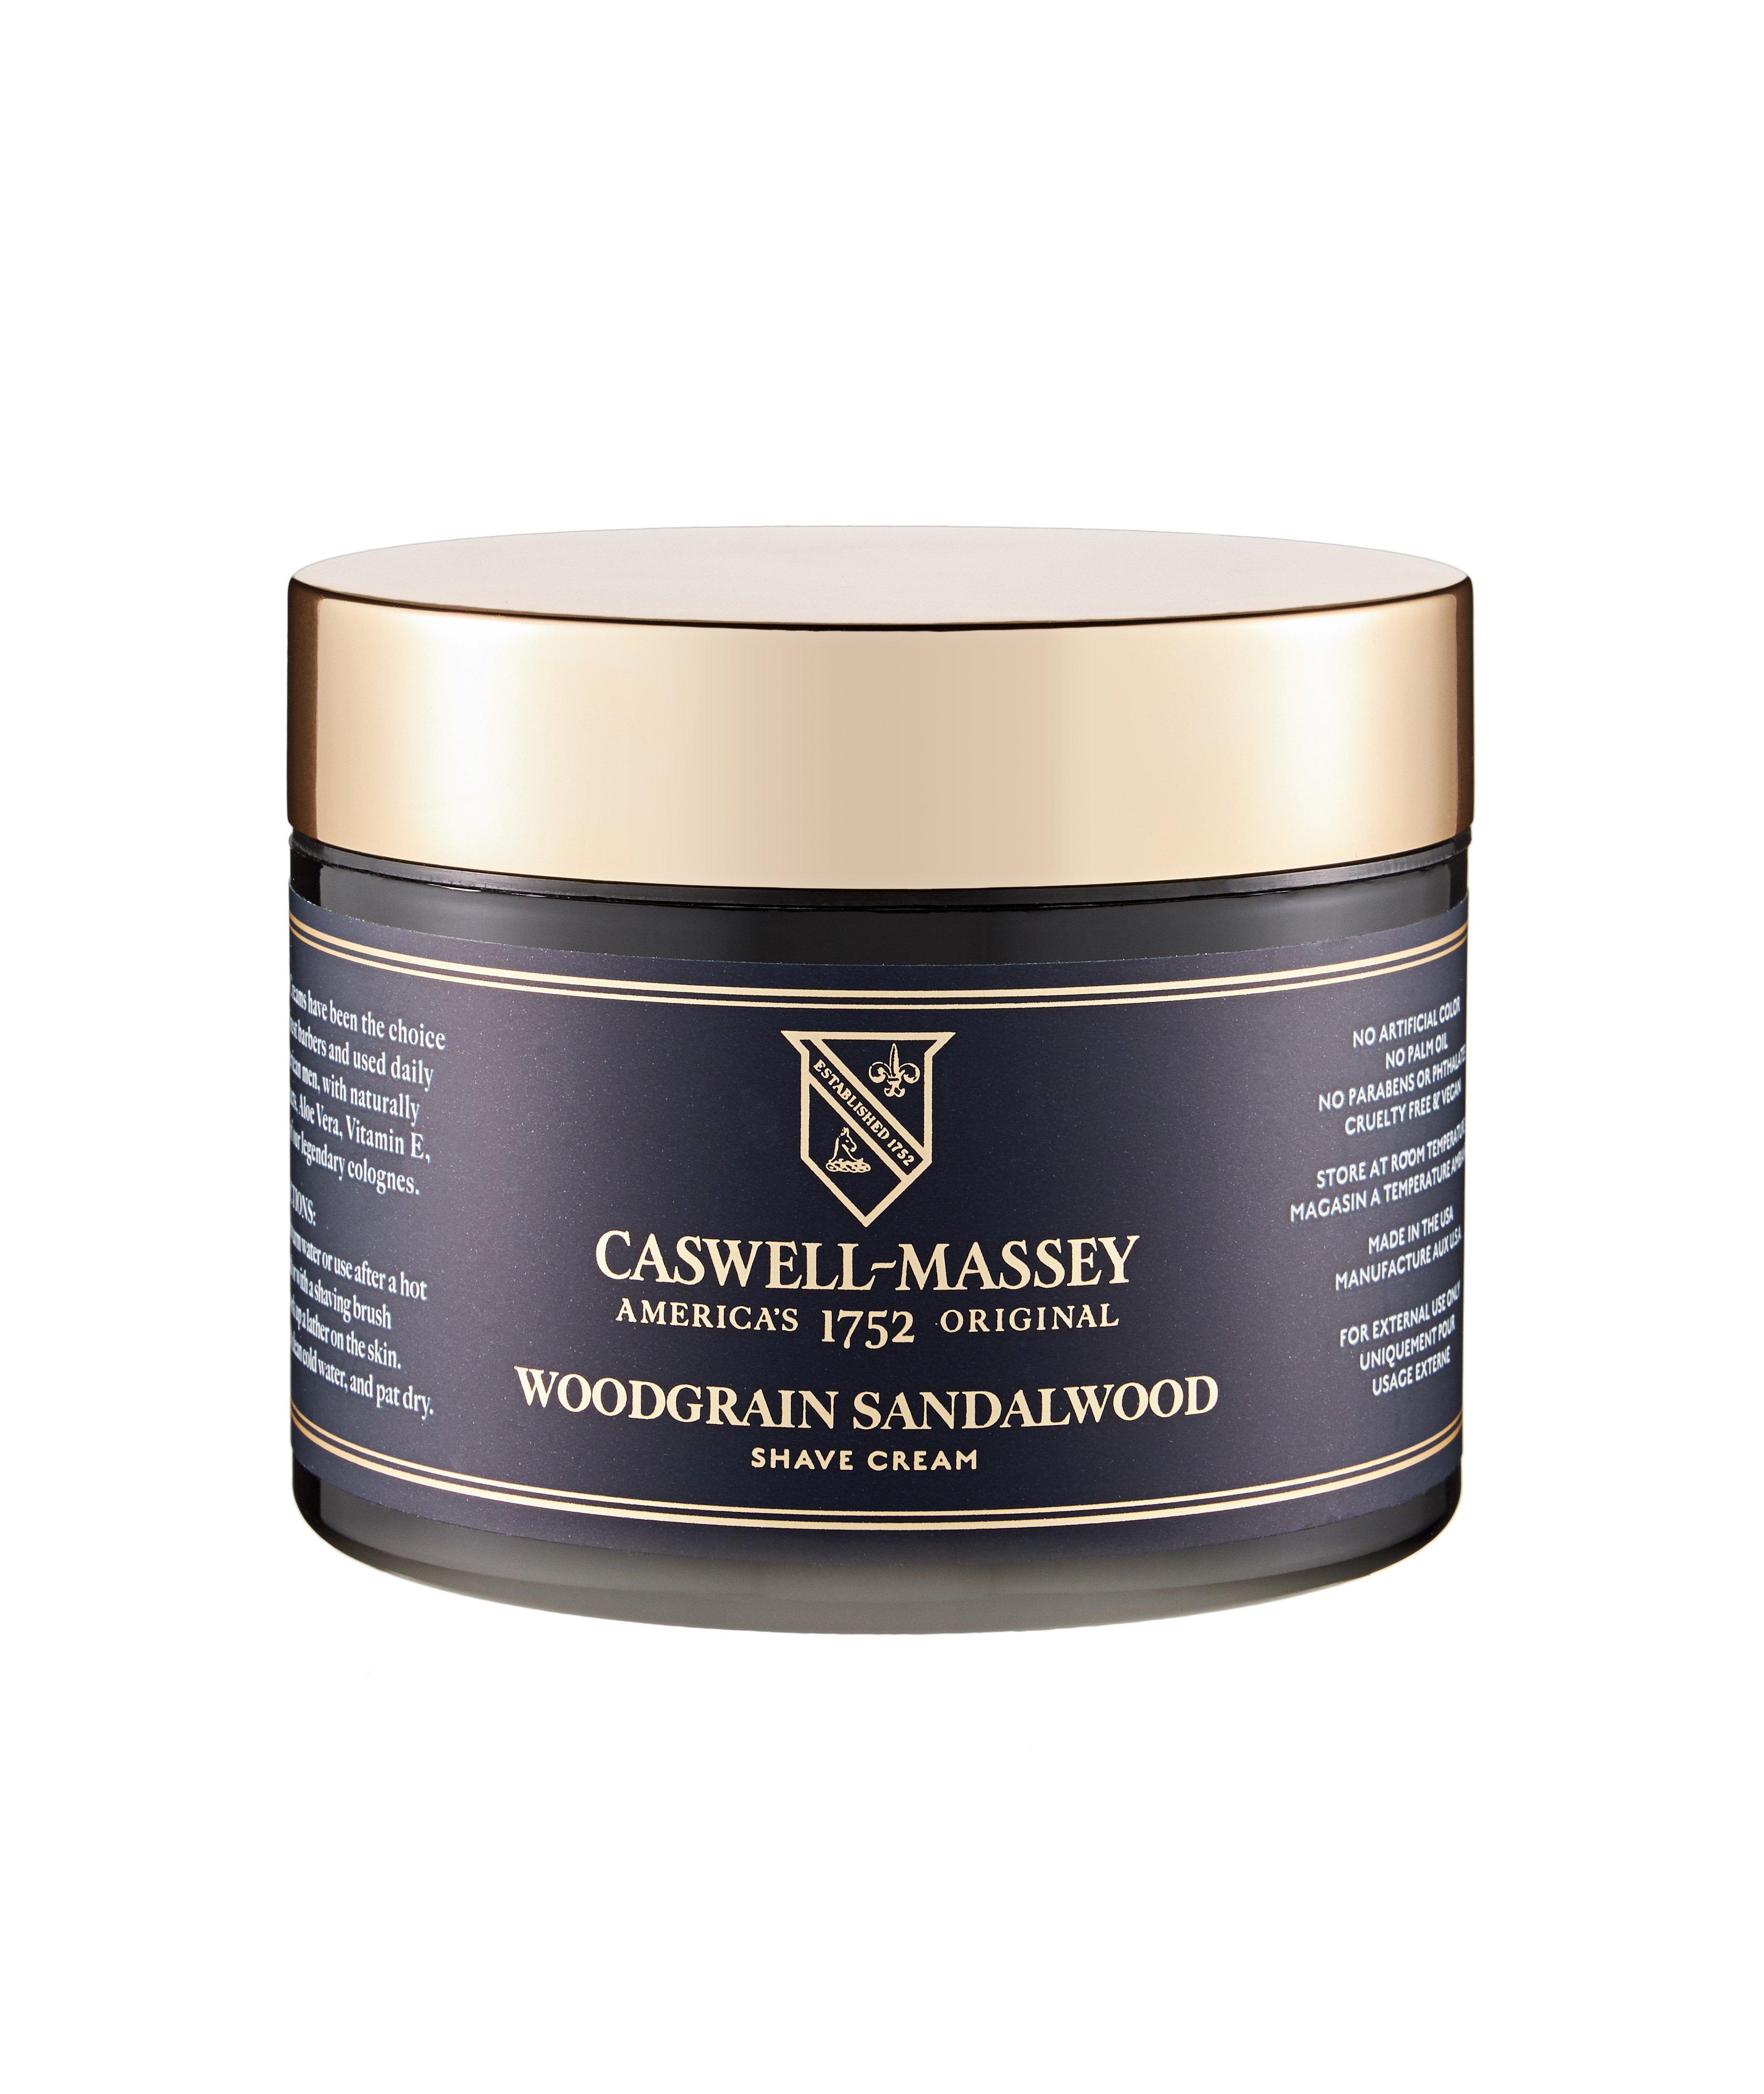 Caswell Massey Heritage Woodgrain Sandalwood Shave Cream in Jar image 0